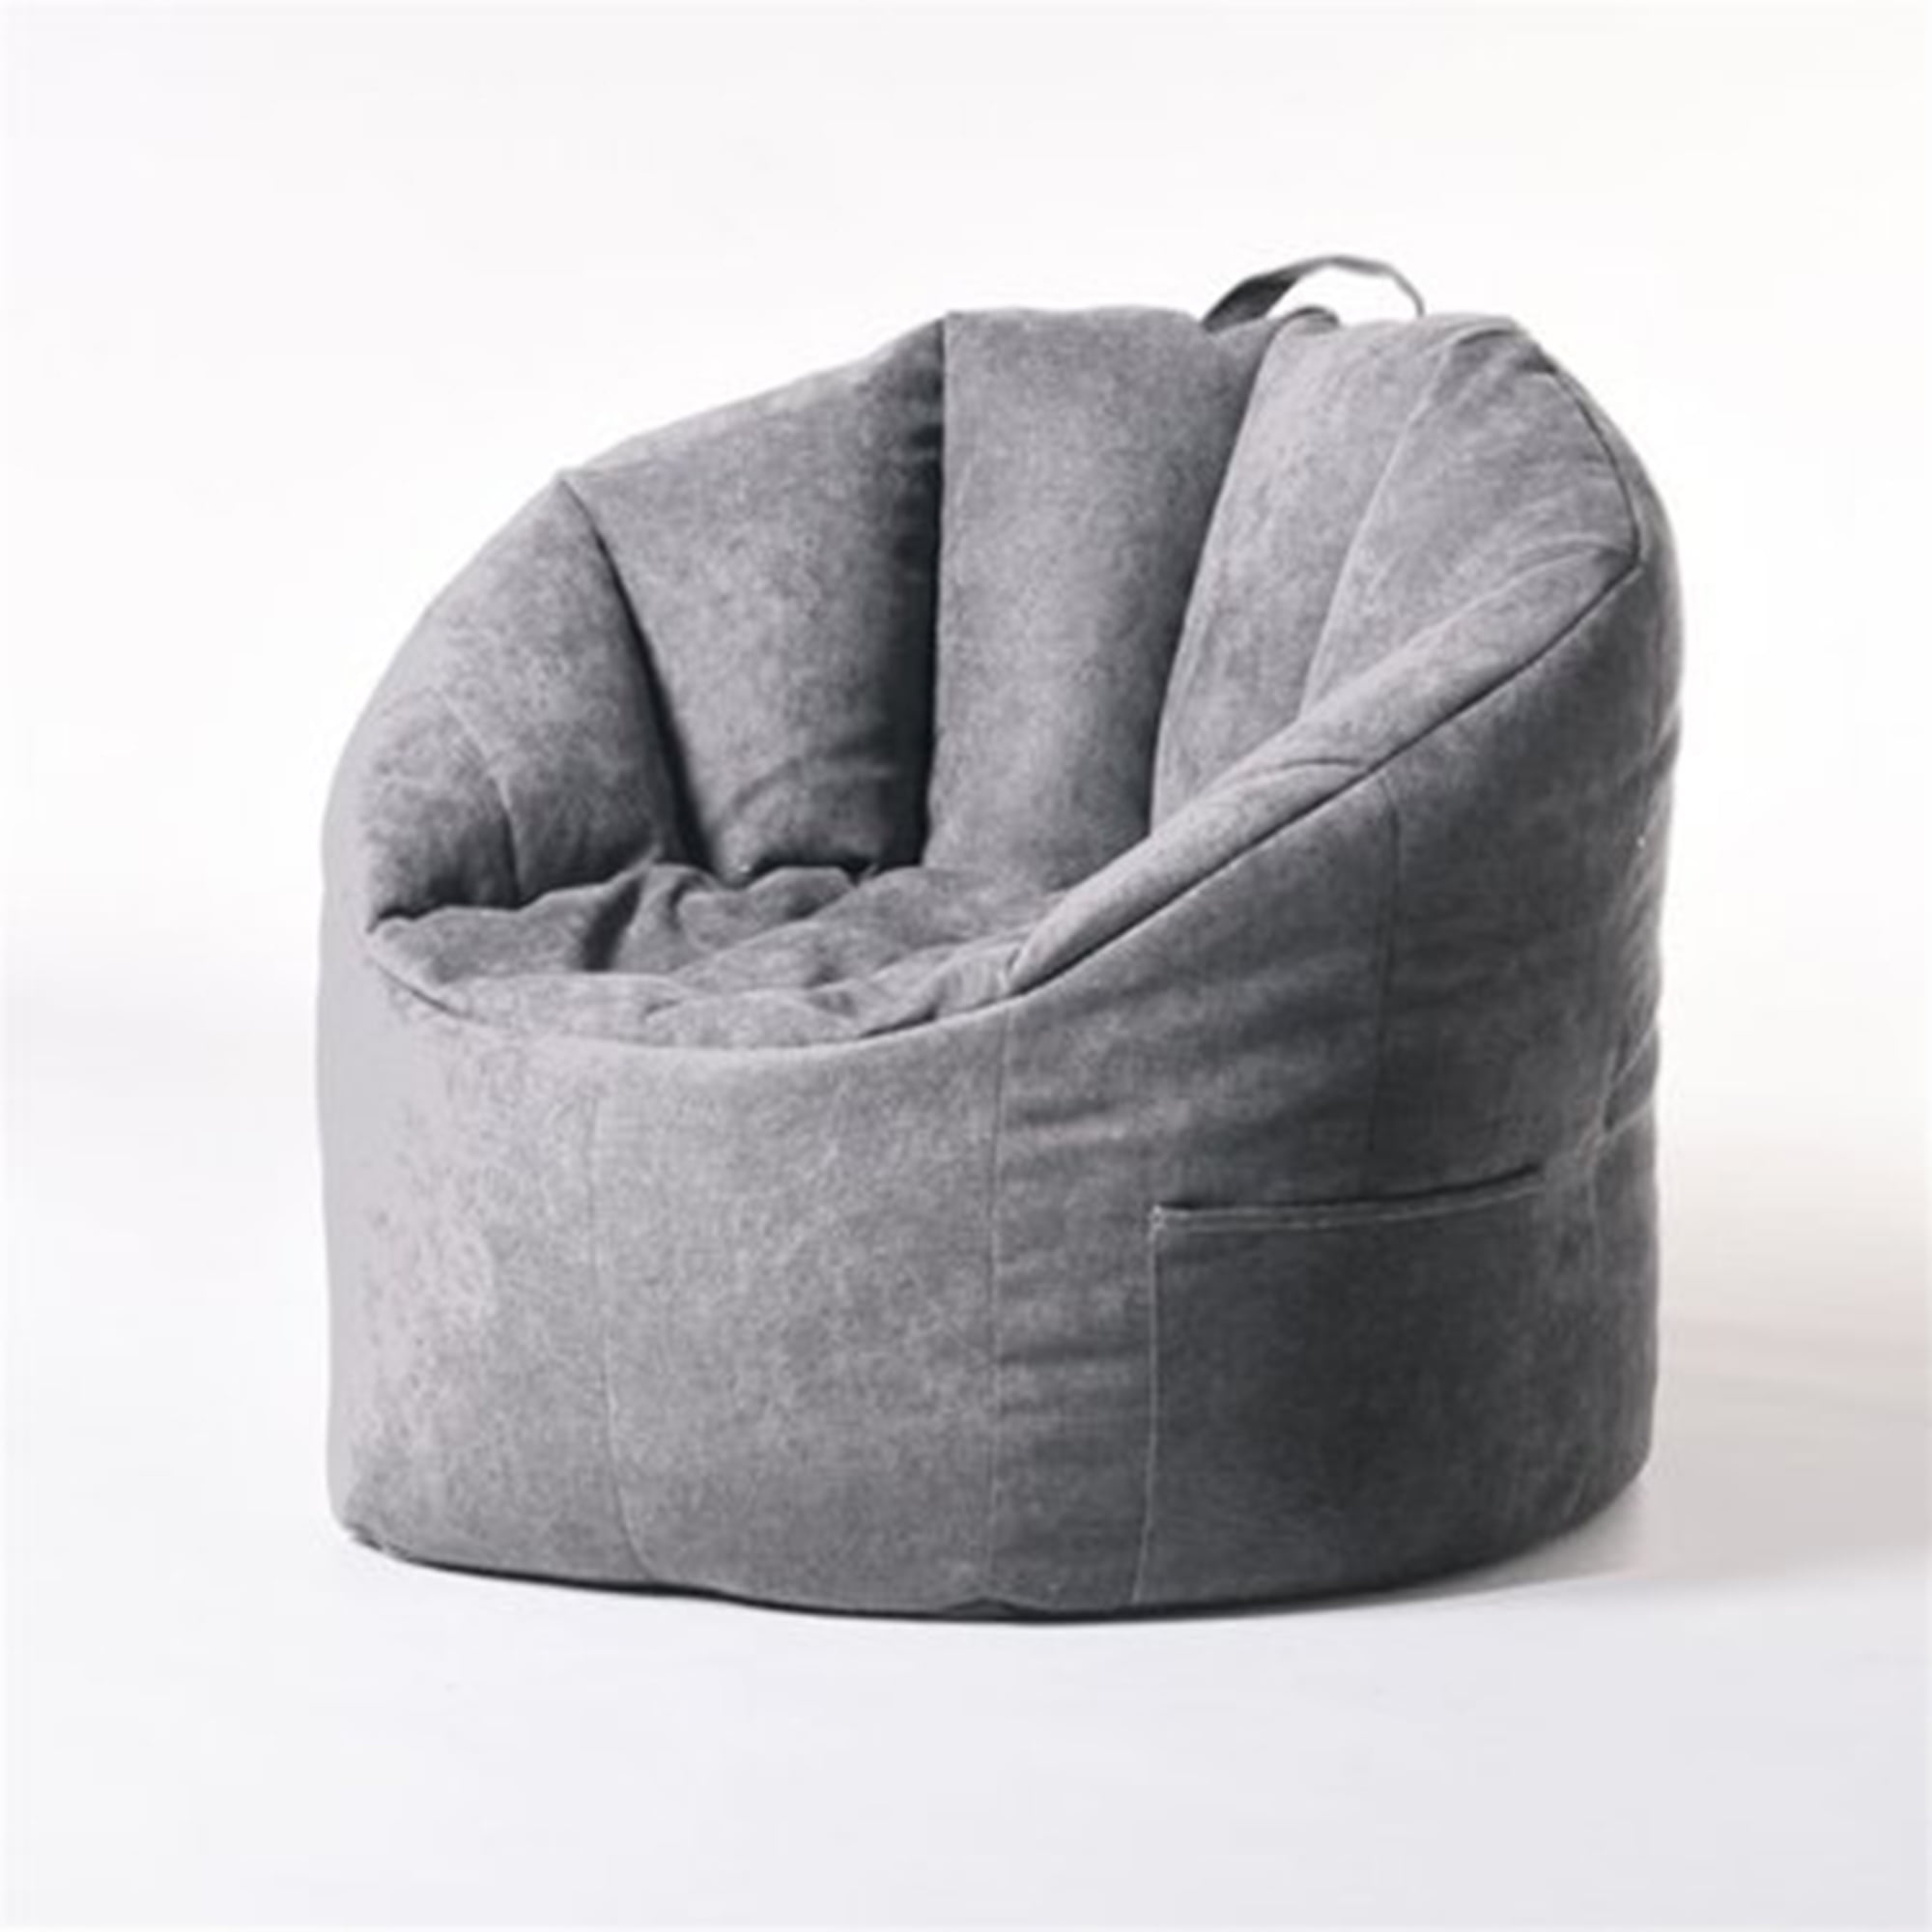 Bean Bag Chair Cover No Filling, Natural Cotton Linen